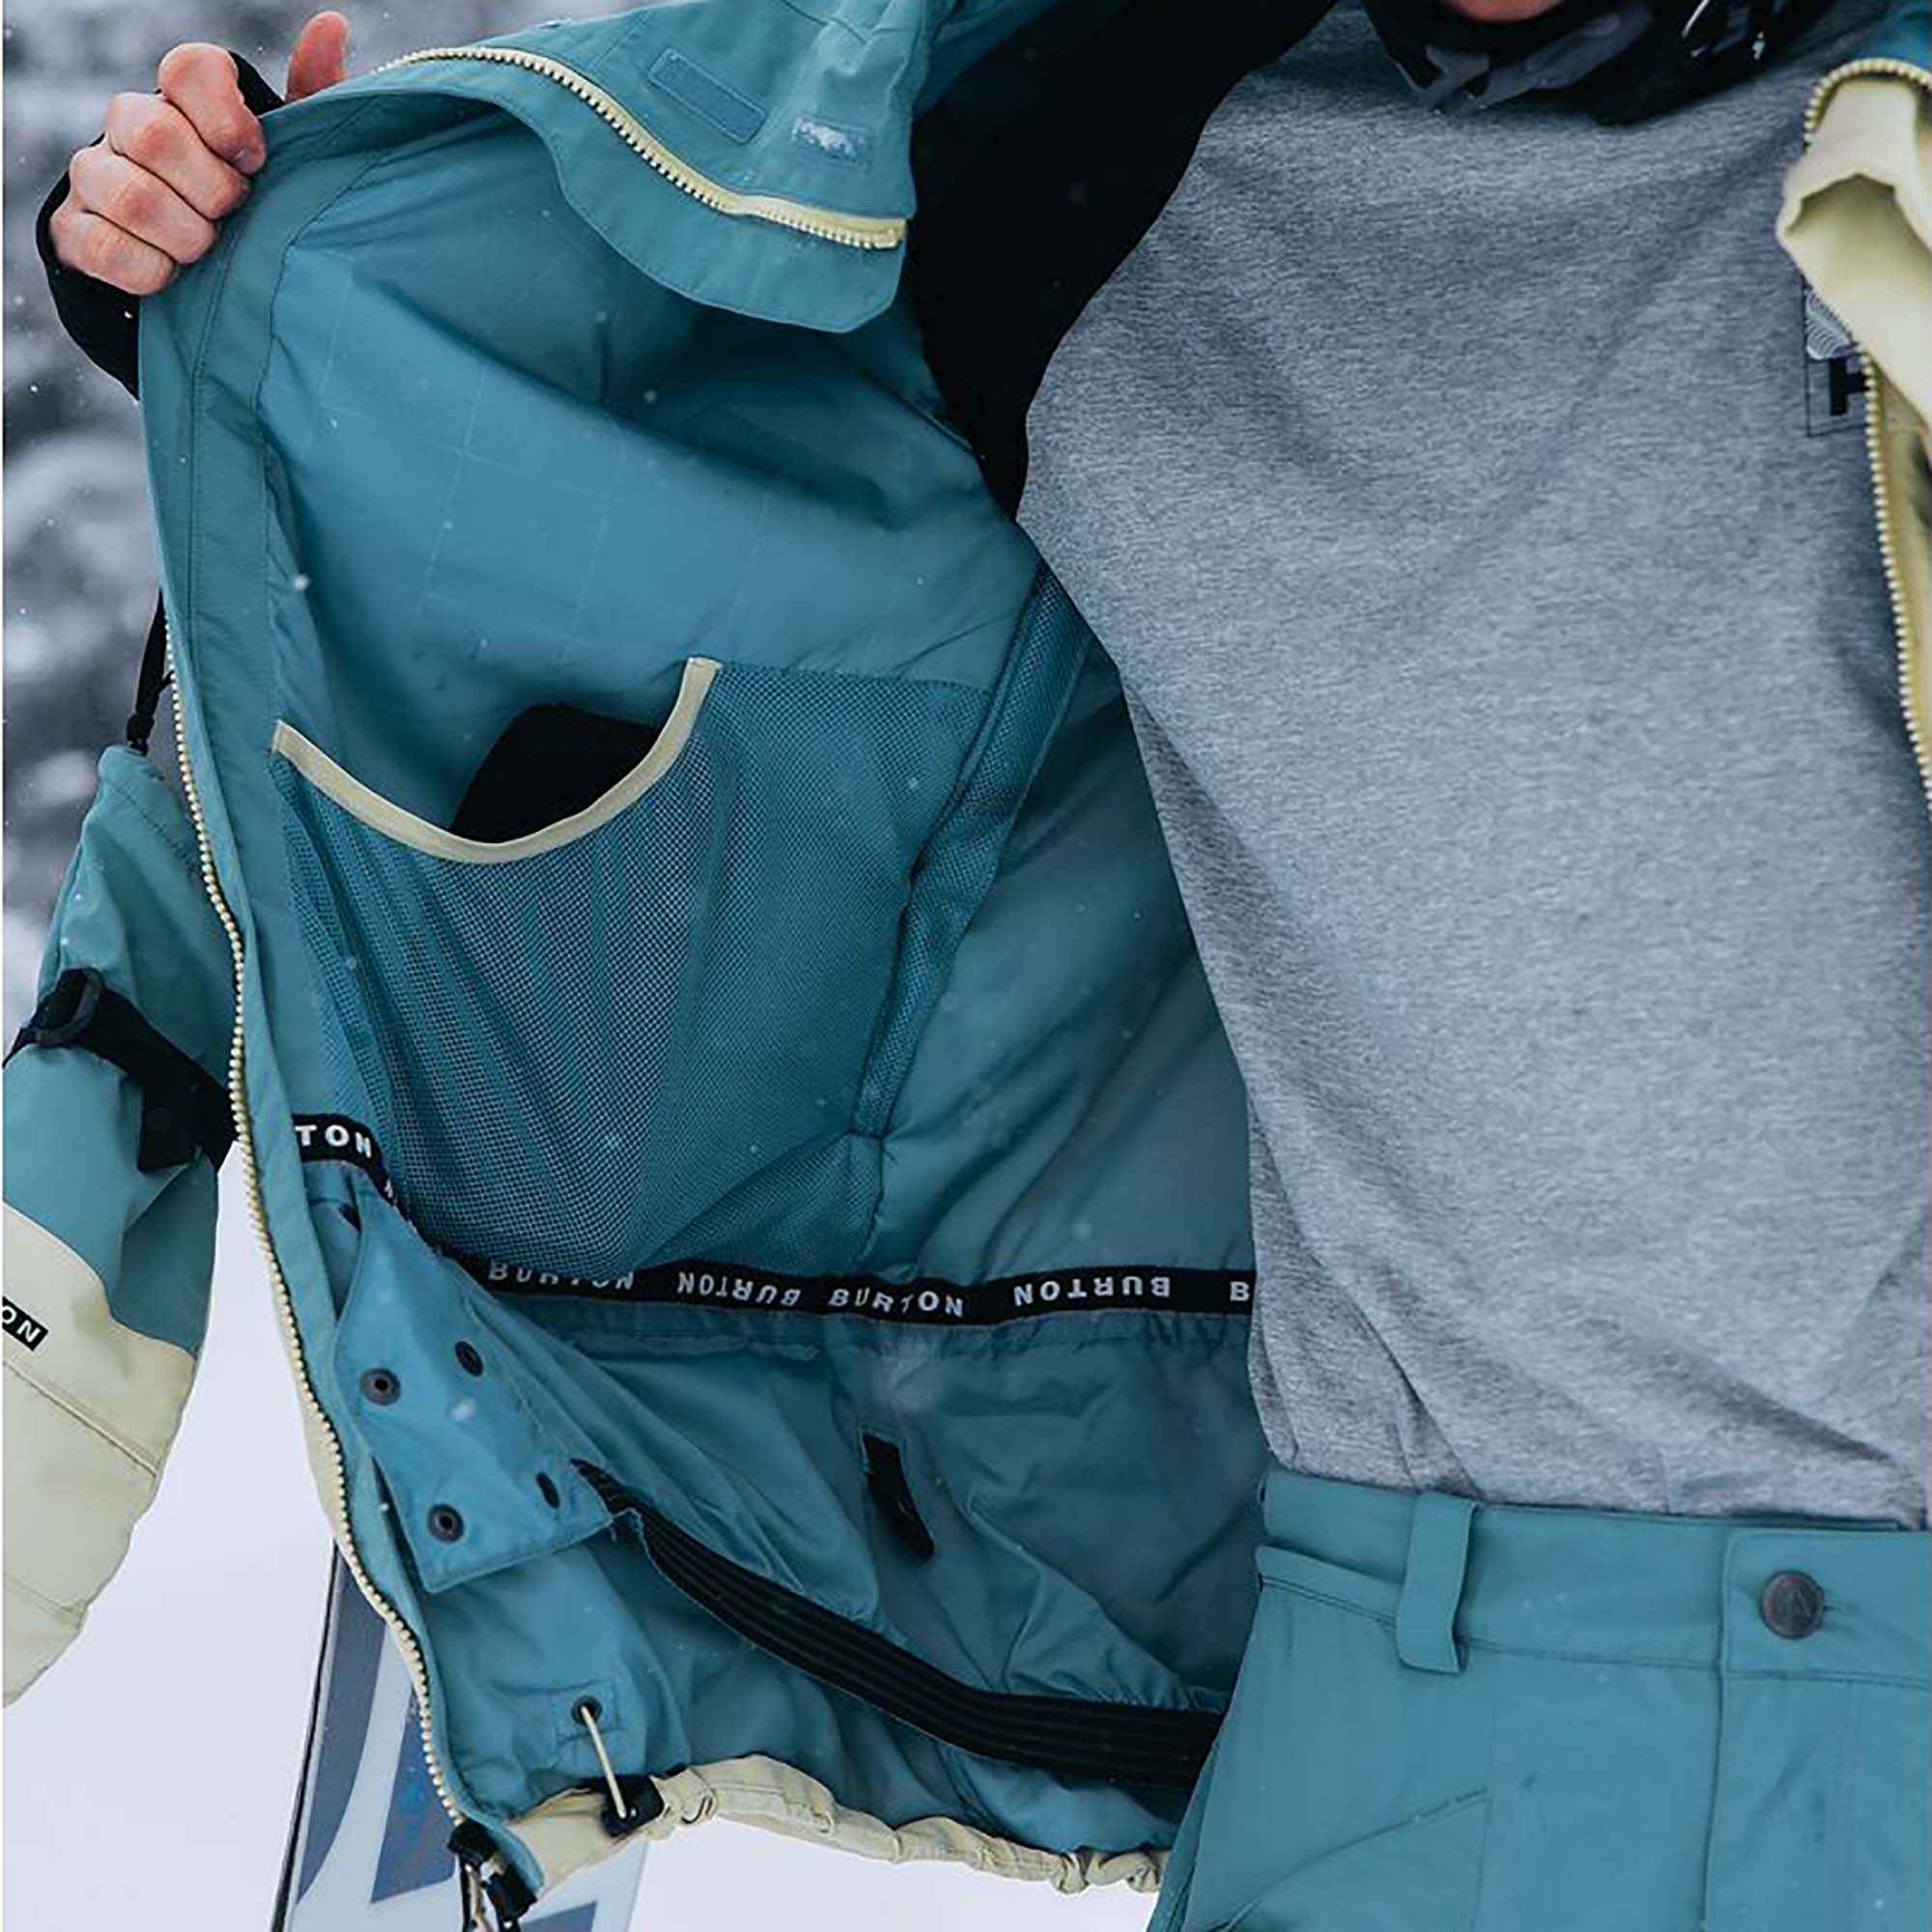 Burton Covert 2.0 Ski/Snowboard Jacket